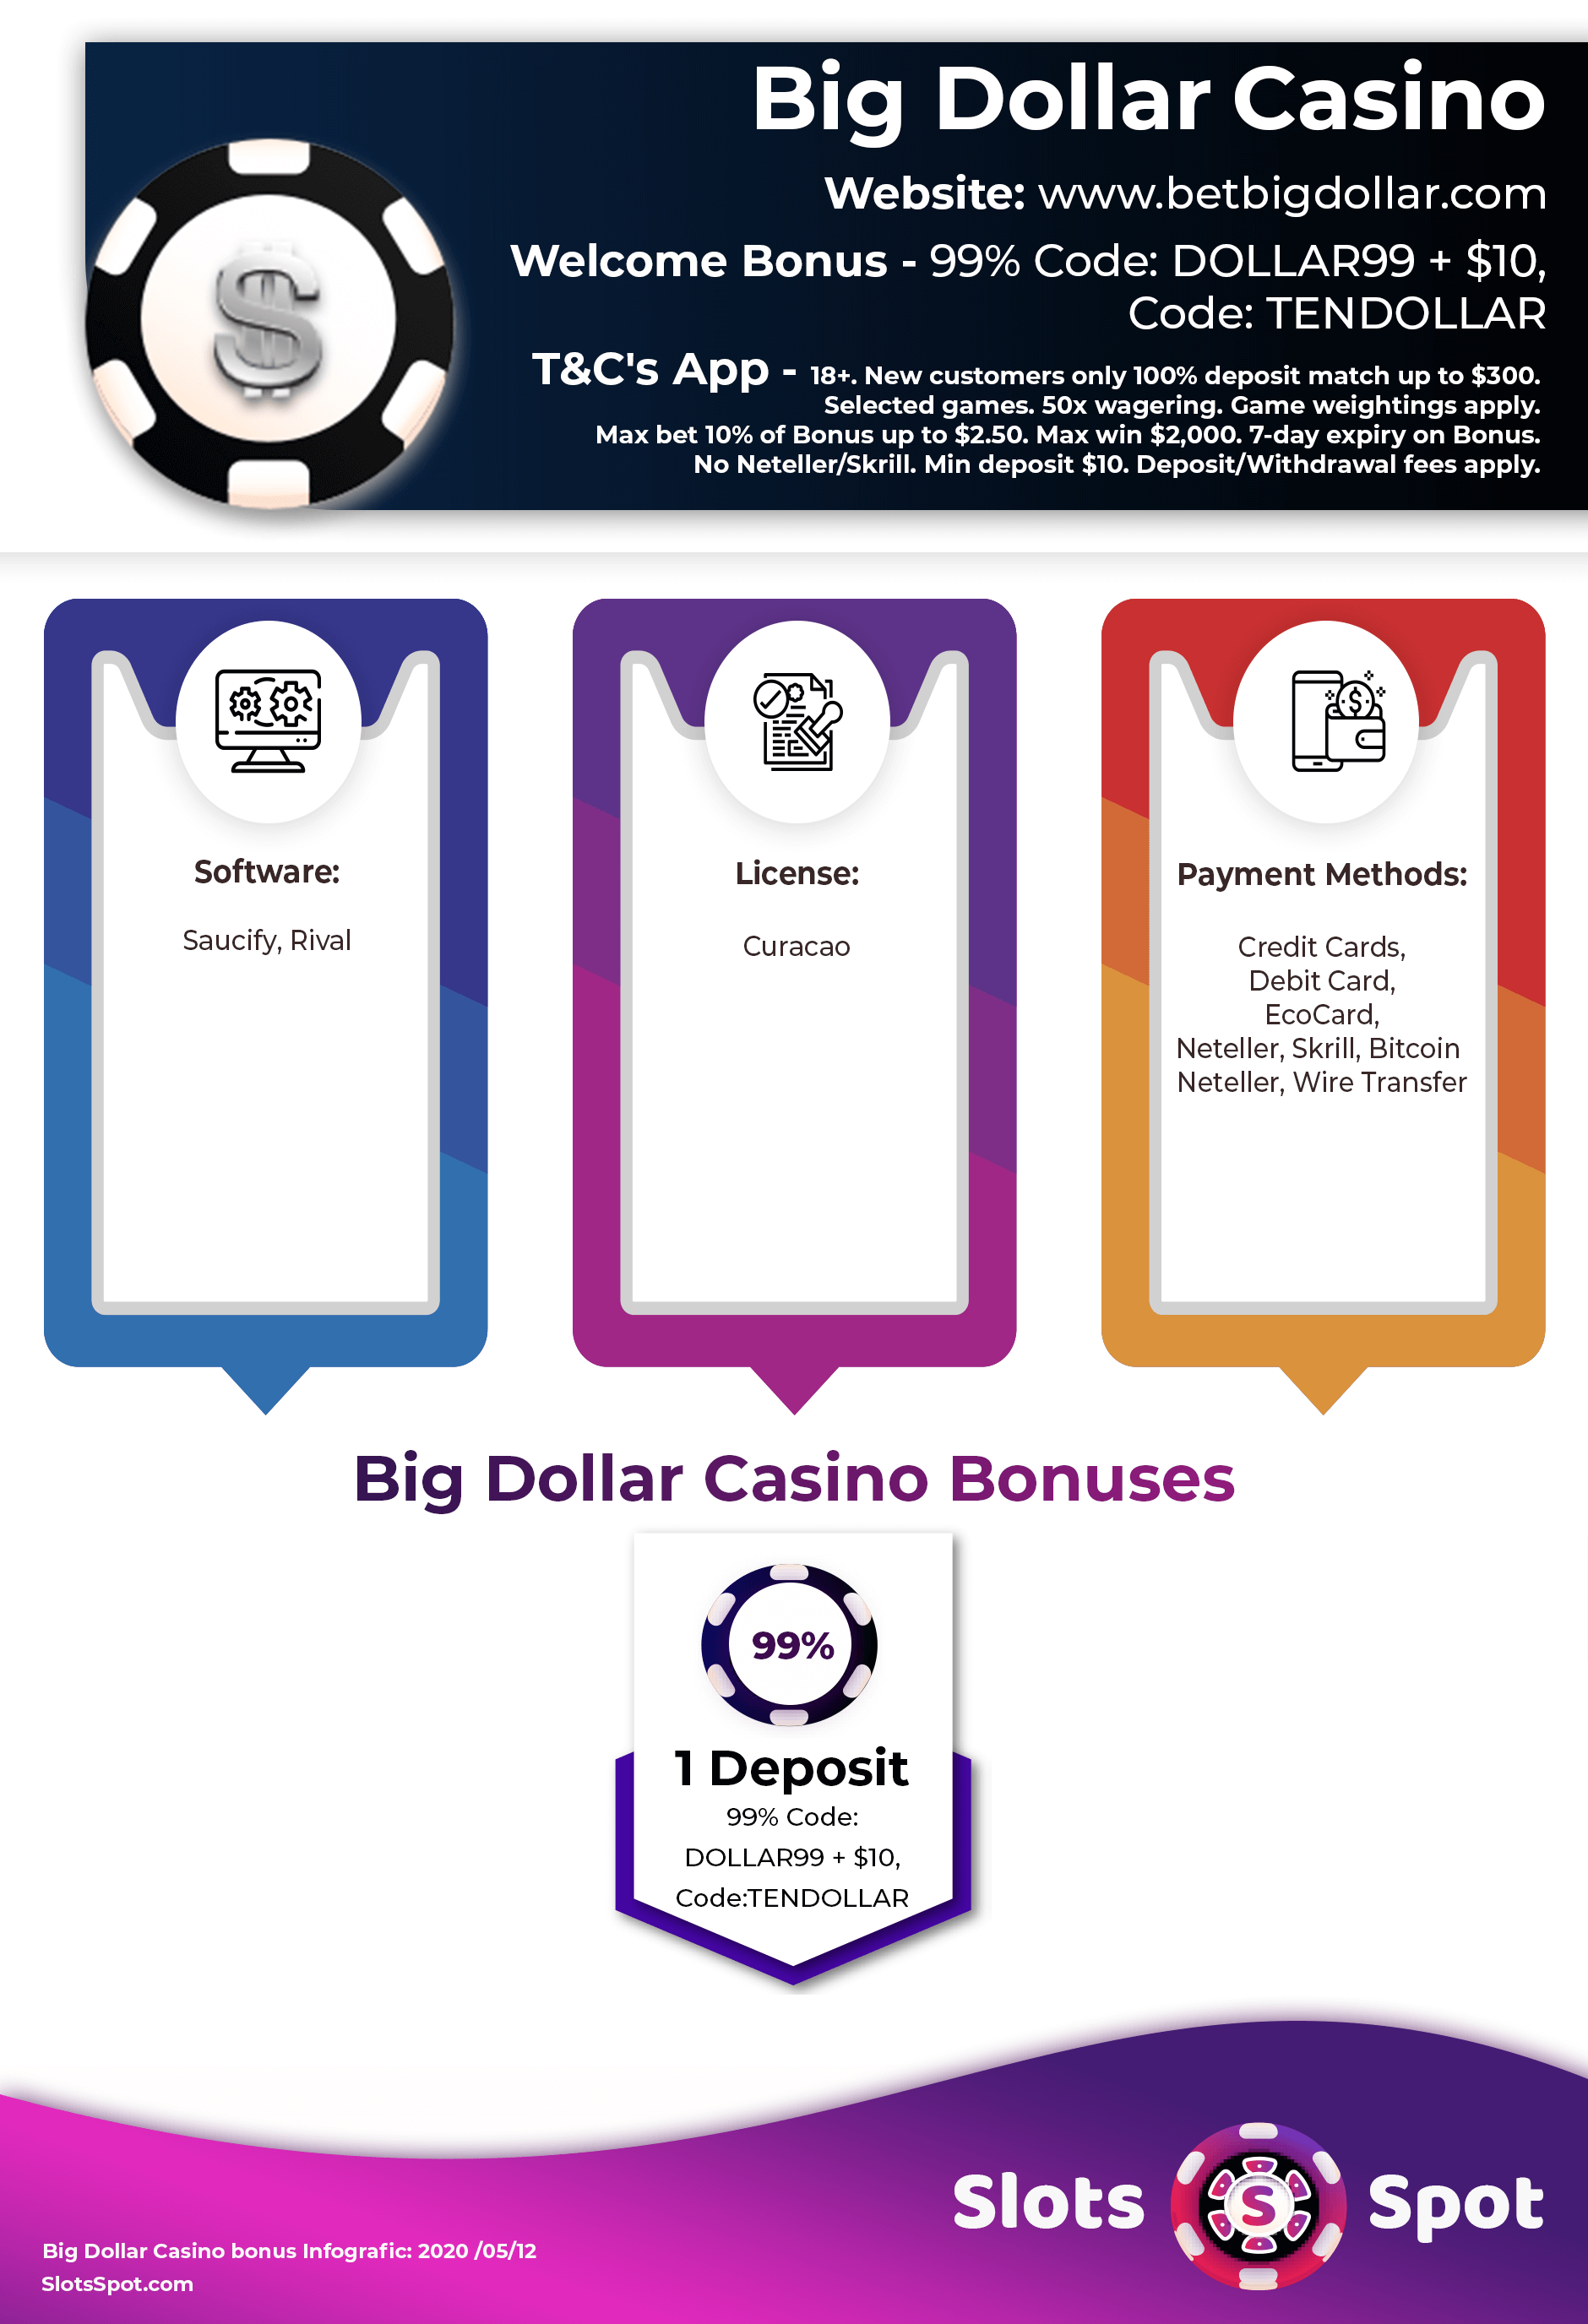 Betbigdollar Casino No Deposit Bonus Codes